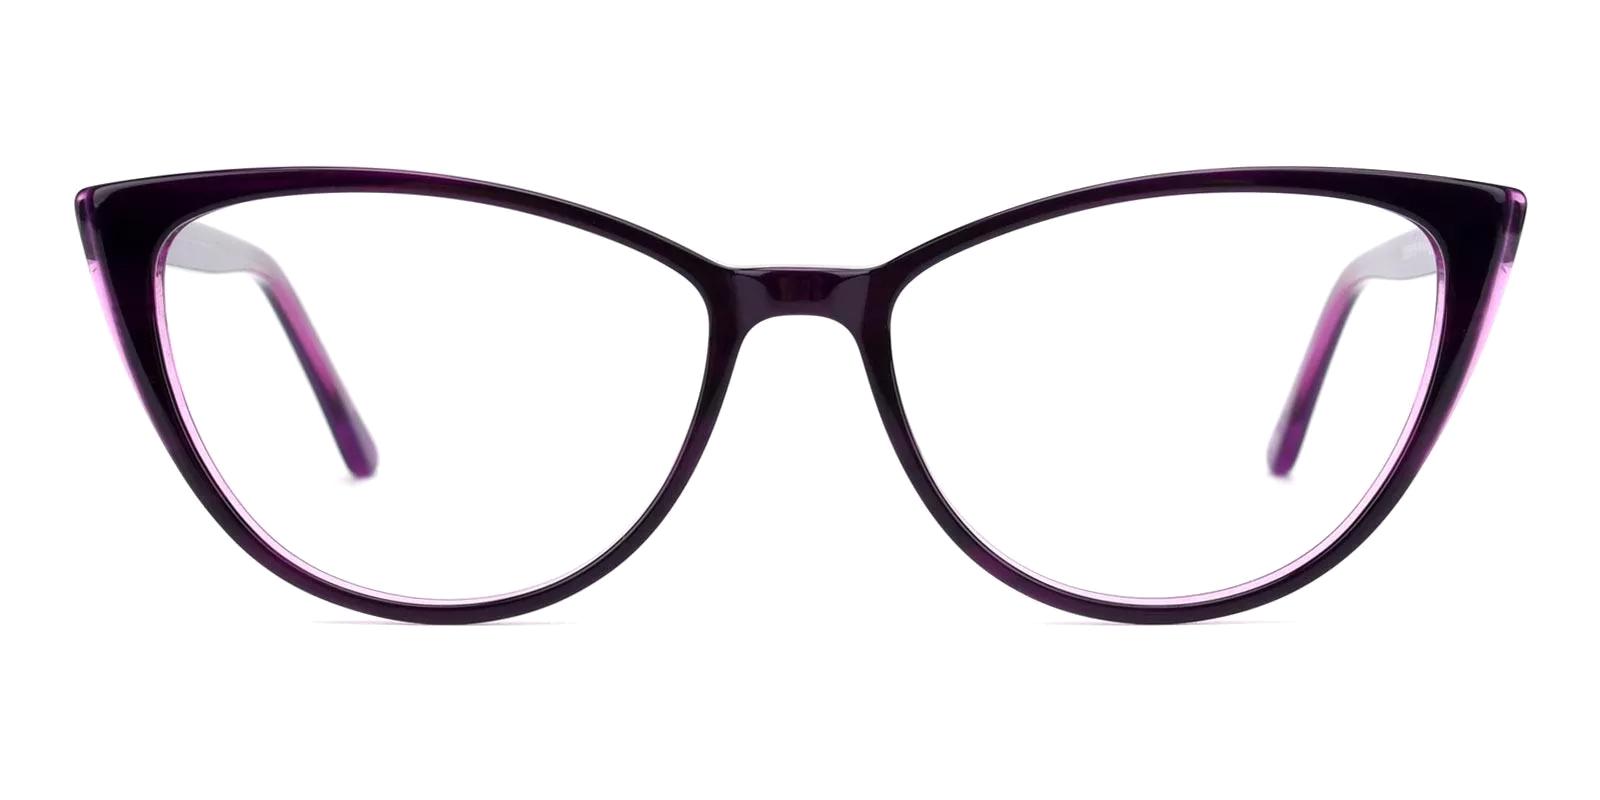 Holory Purple Acetate Eyeglasses , SpringHinges , UniversalBridgeFit Frames from ABBE Glasses